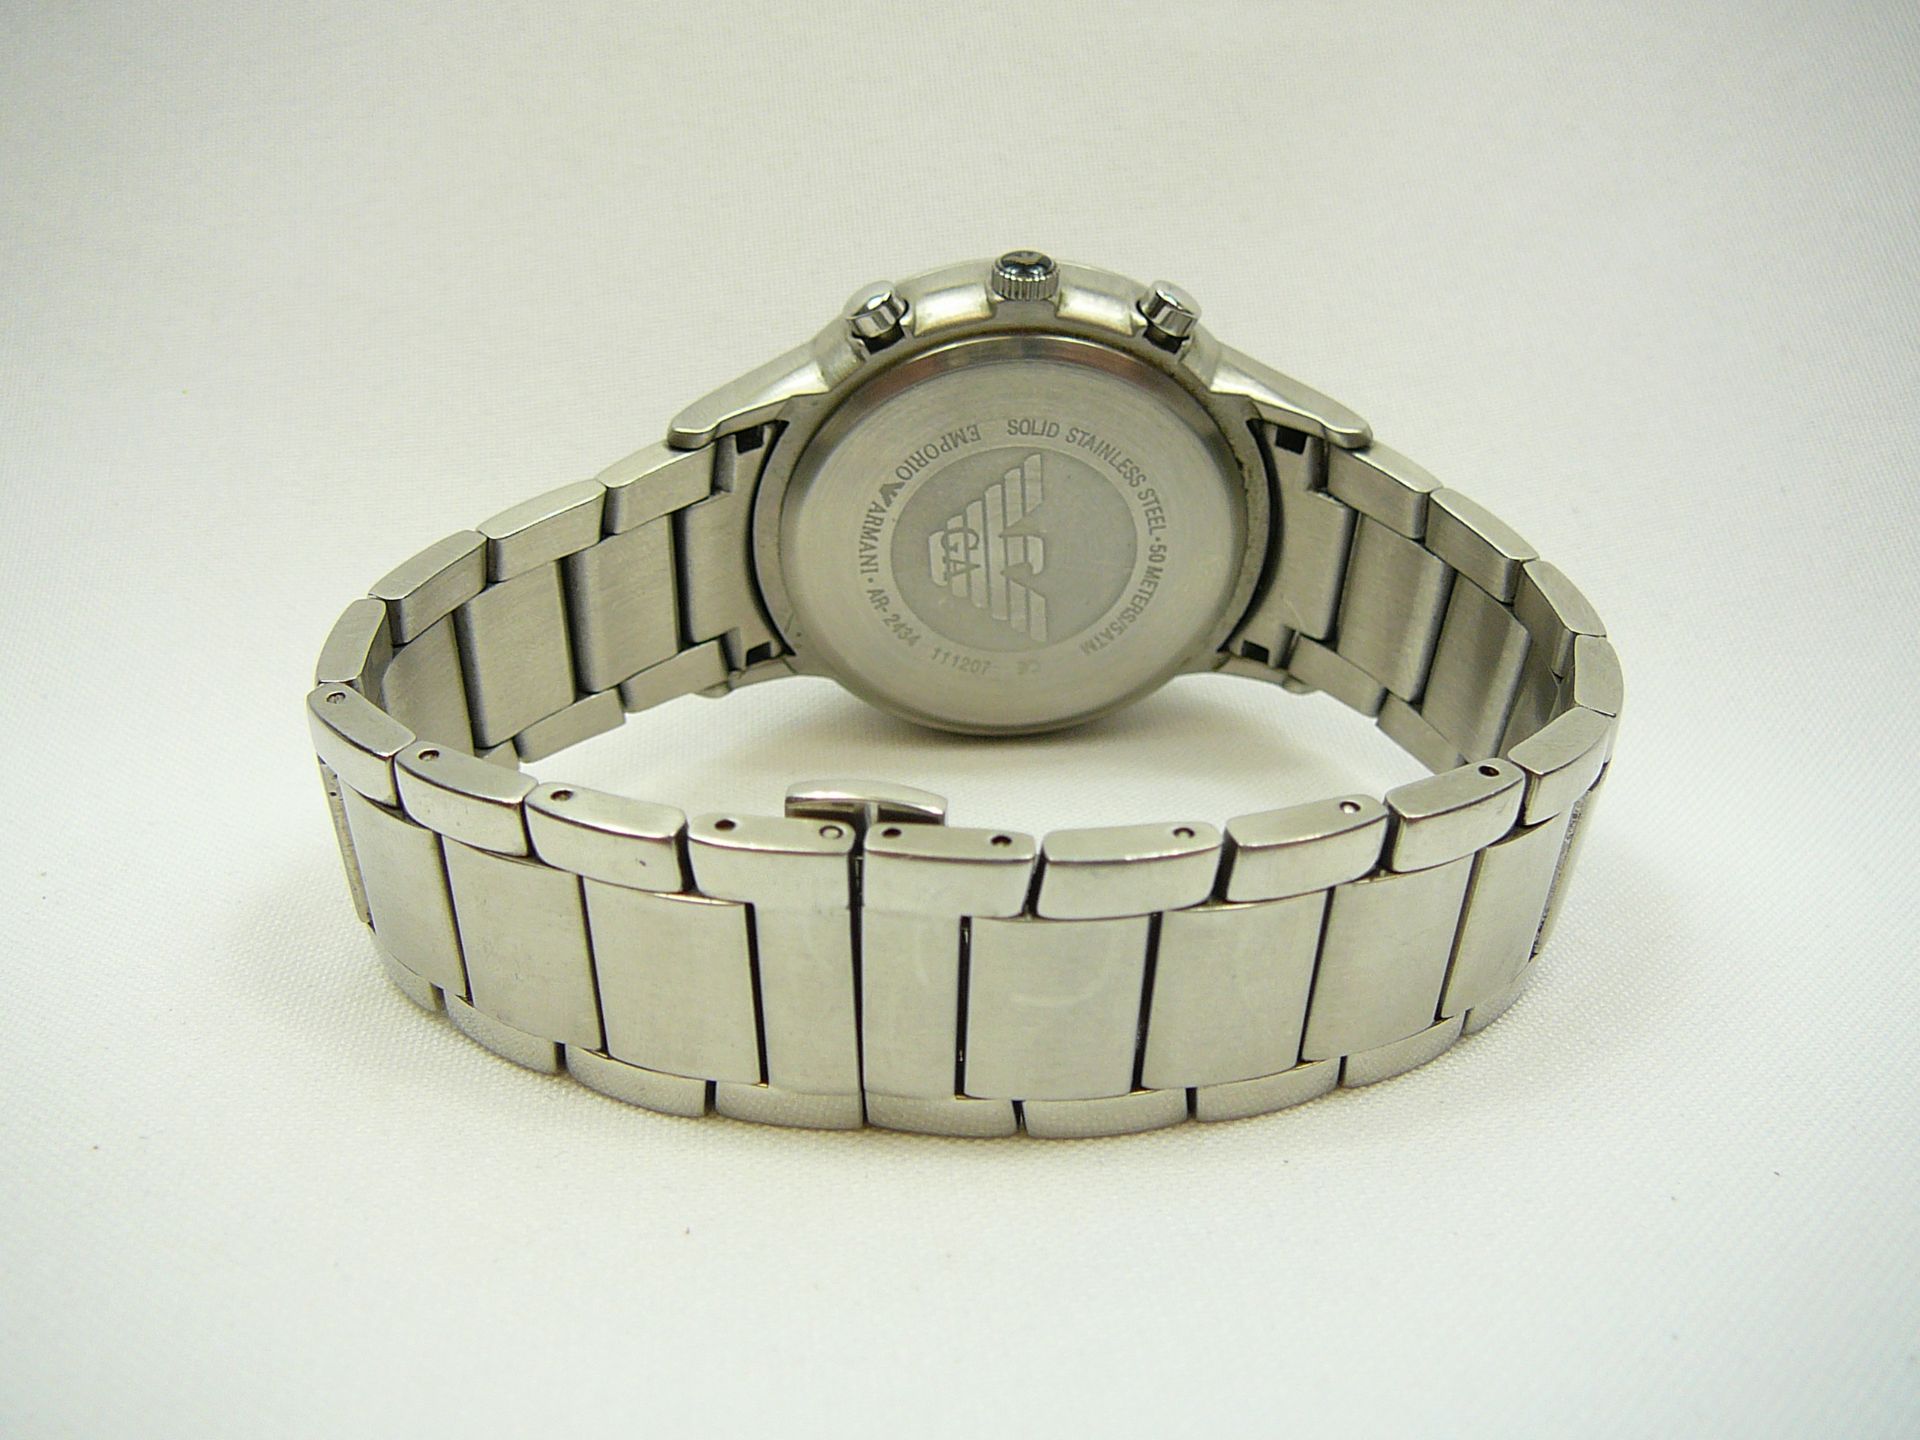 Gents Emporio Armani Wrist Watch - Image 3 of 3